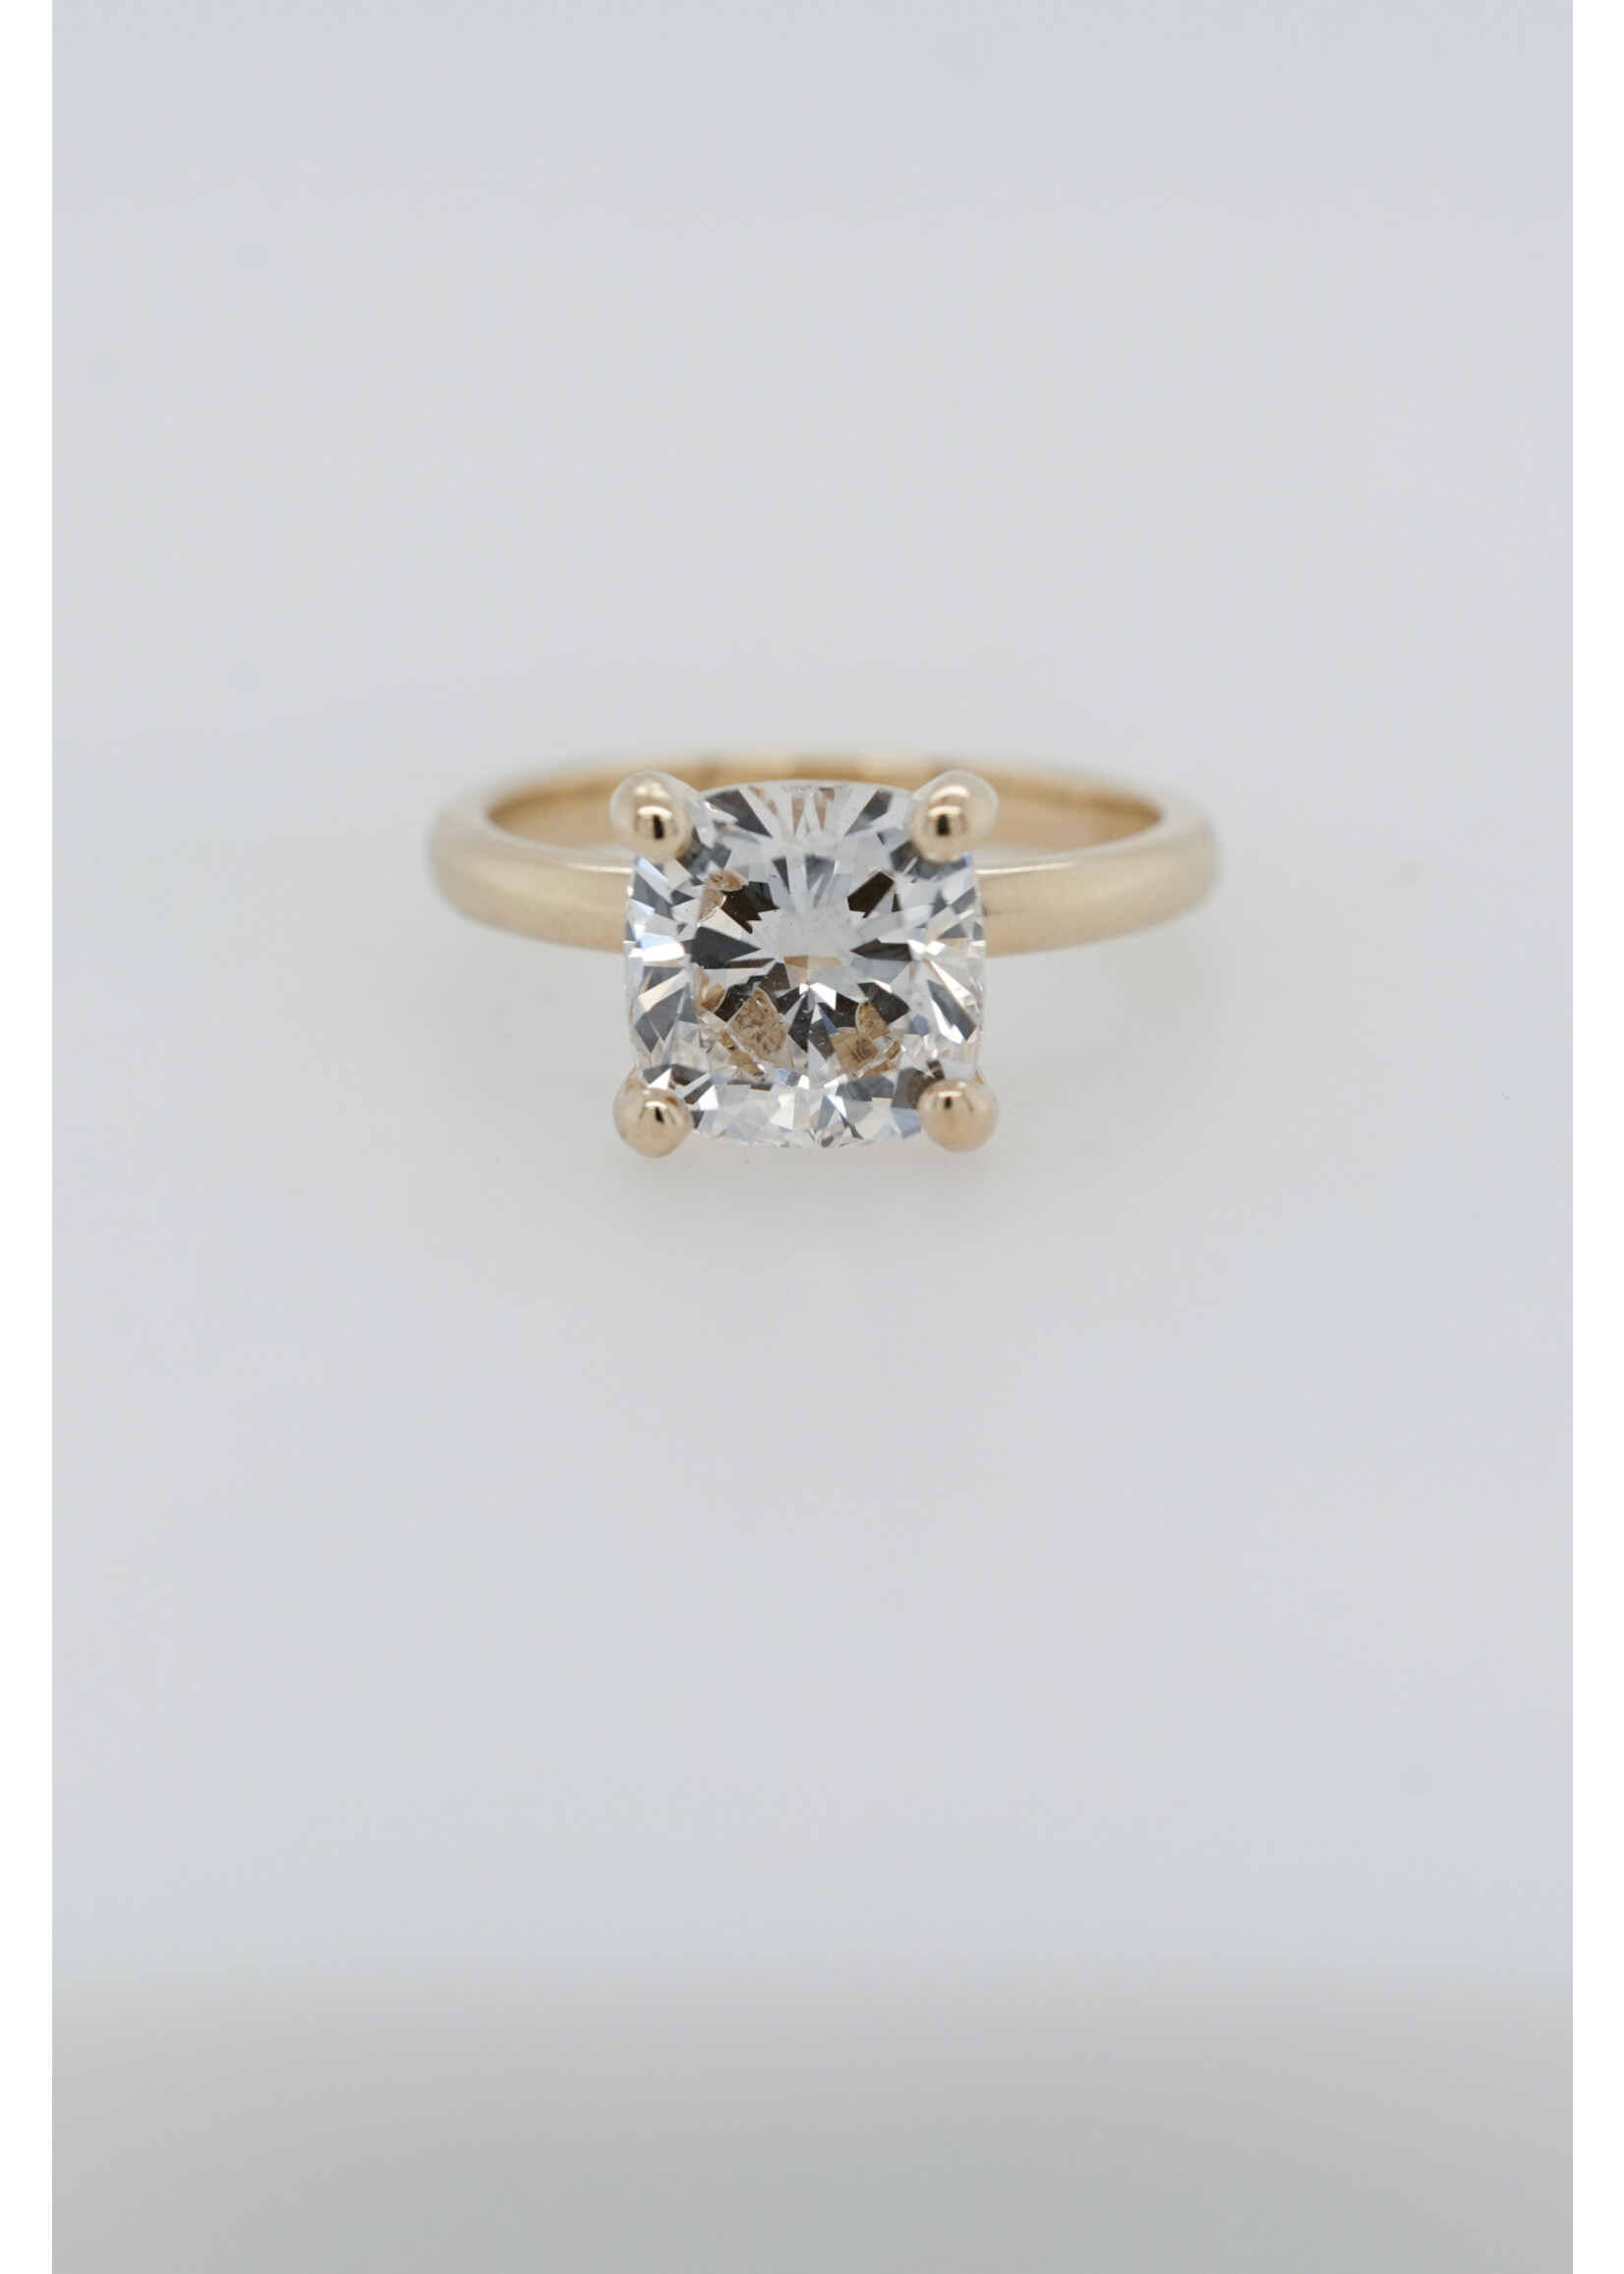 14KY 4.60g 3.41ct I/SI1 IGI Cushion Diamond Solitaire Engagement Ring (size 7)